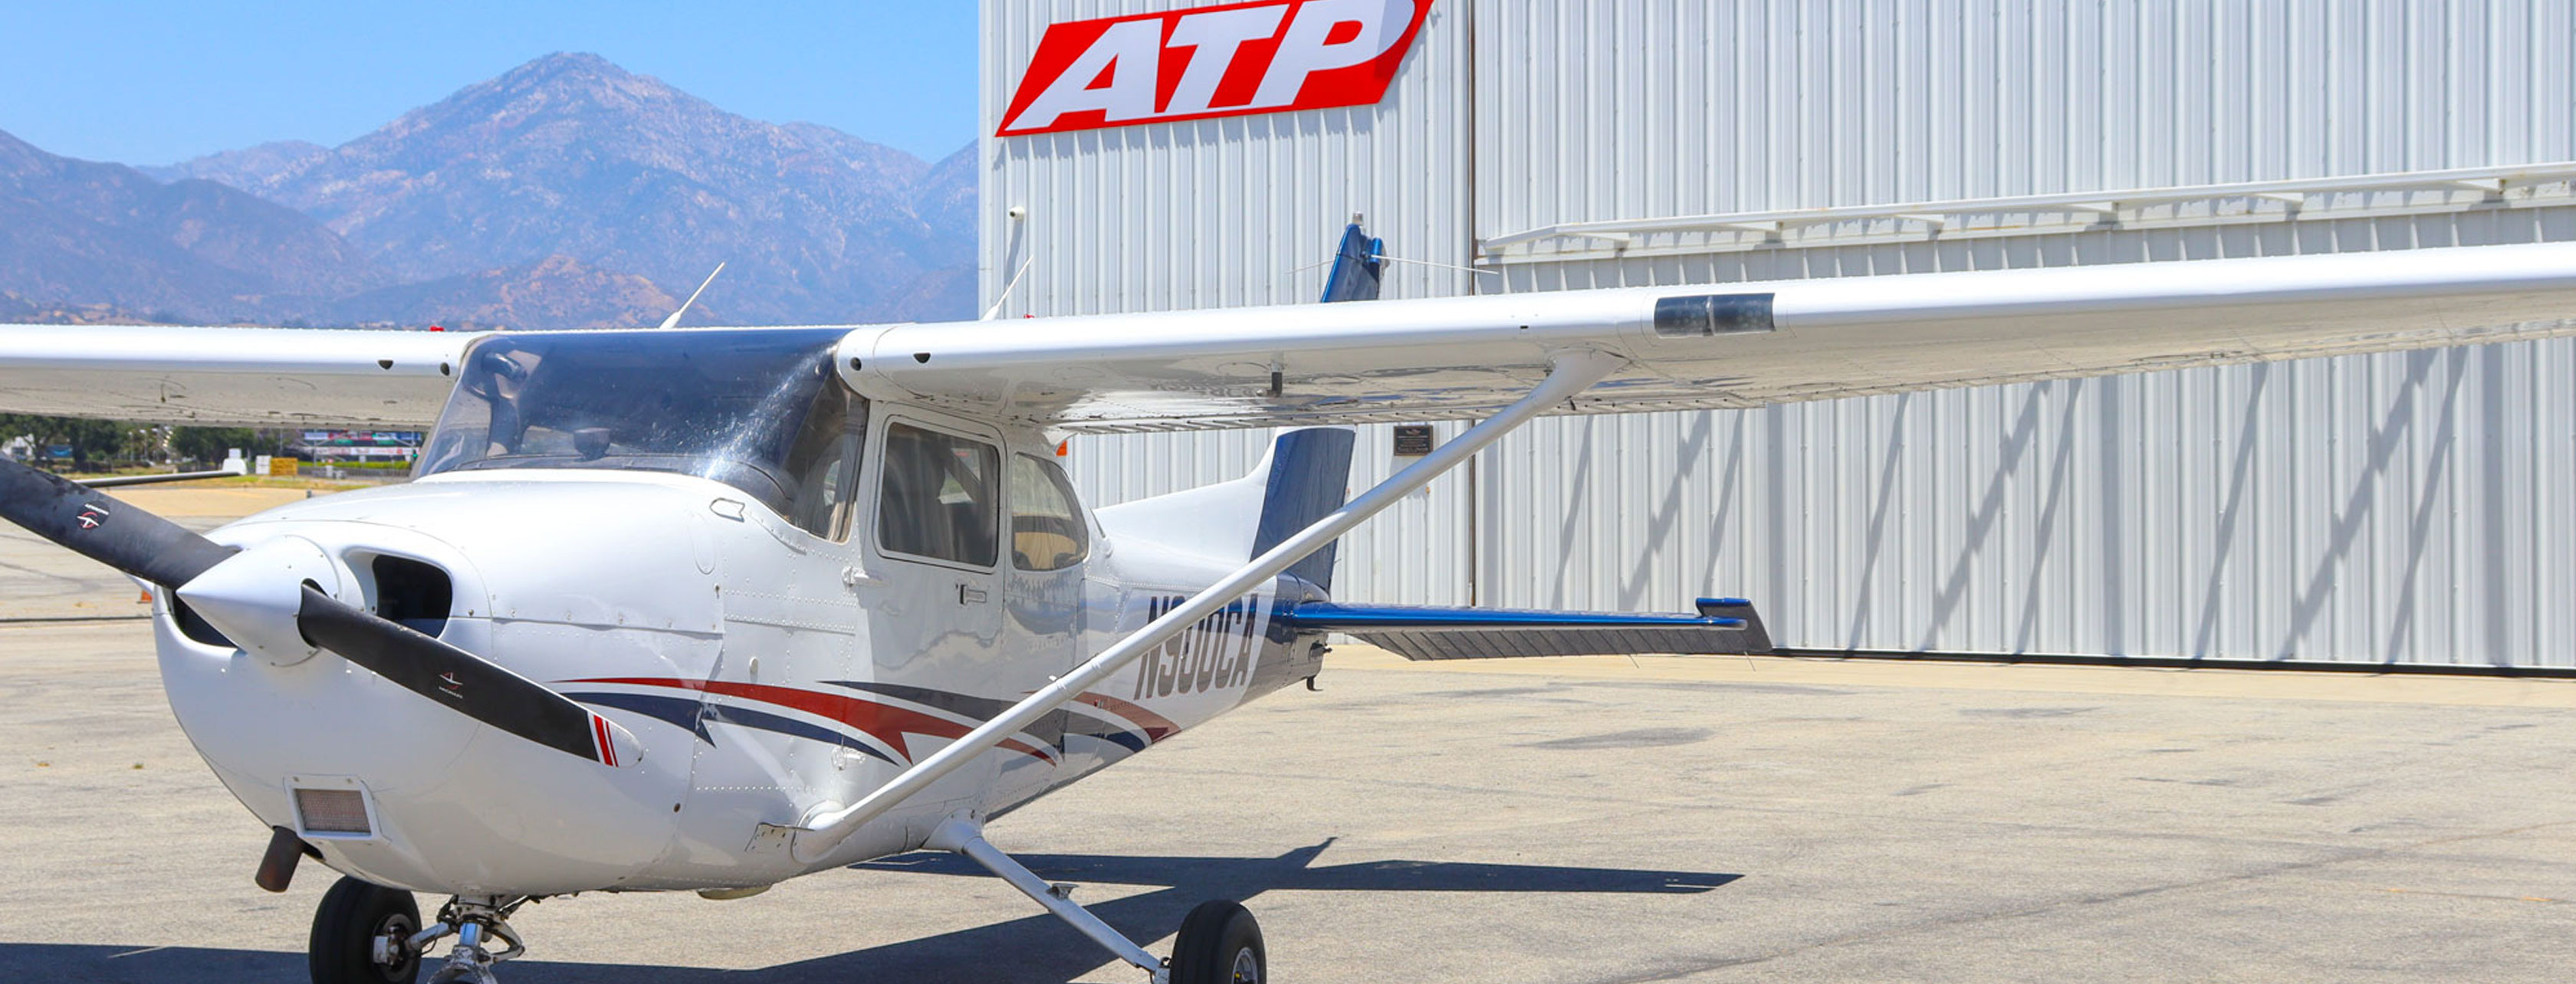 ATP Flight School - Los Angeles, CA